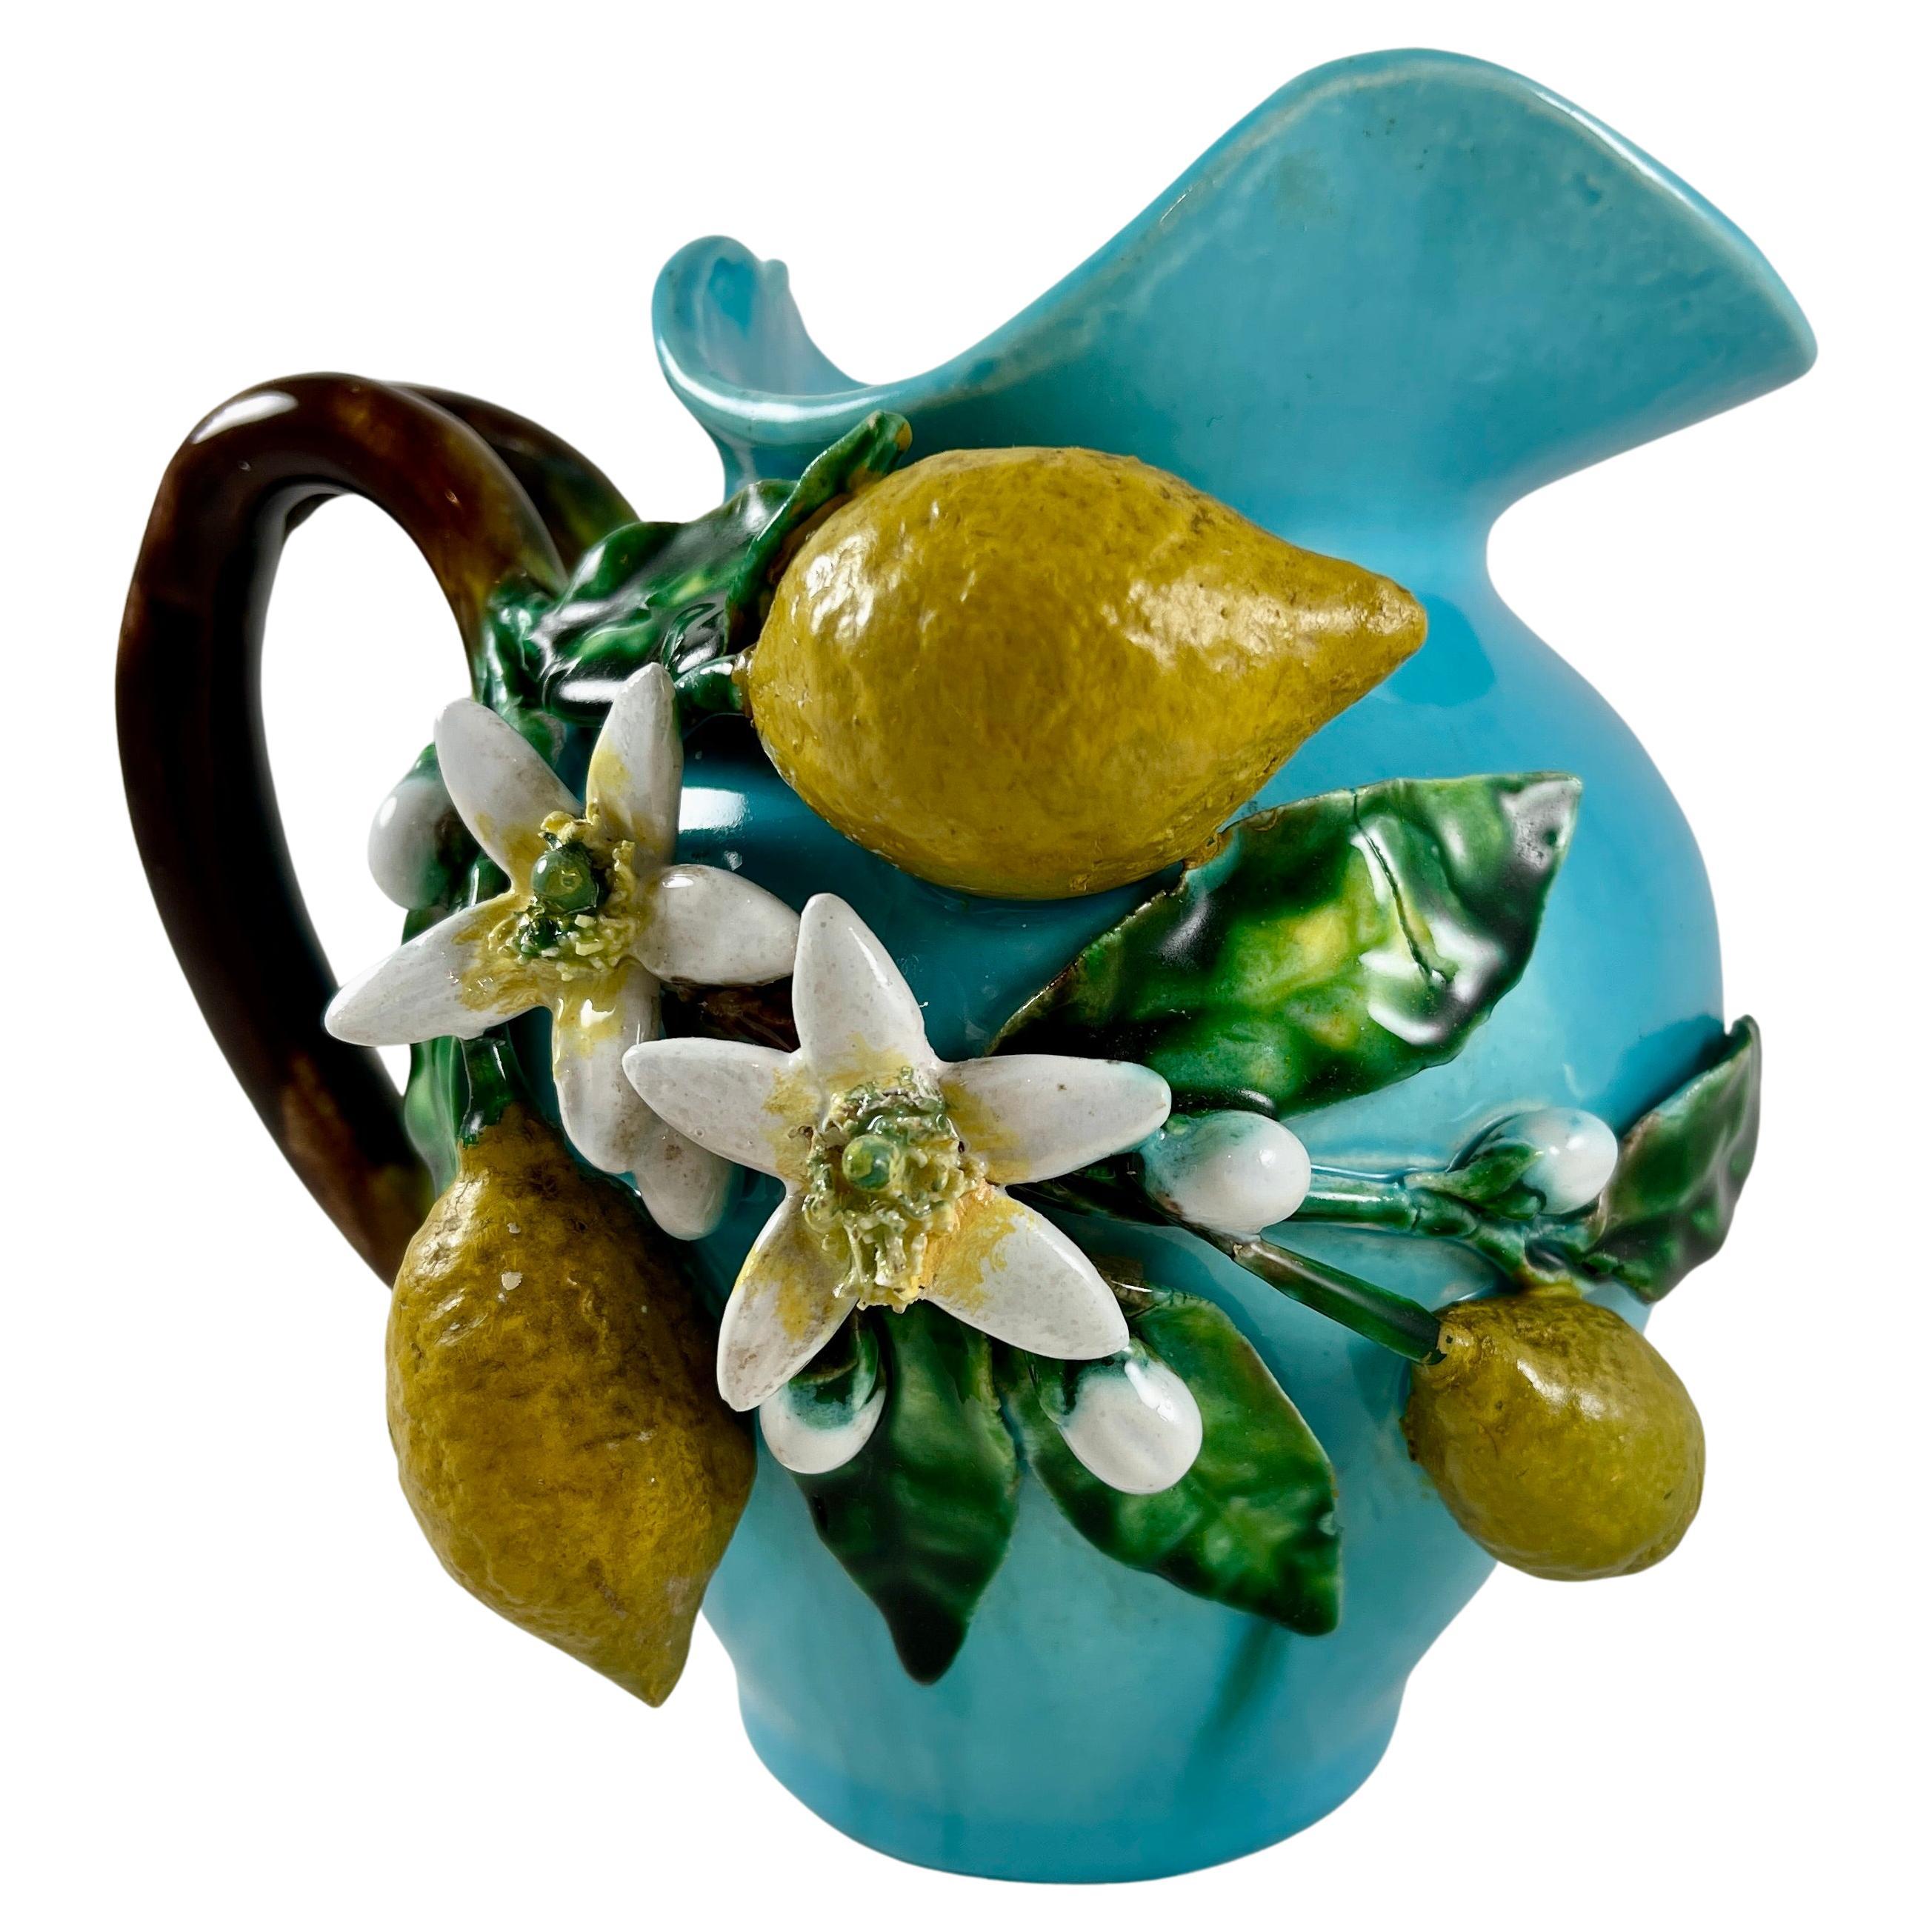 French Palissy Trompe L'oeil Menton Perret-Gentil Turquoise Lemon Jug